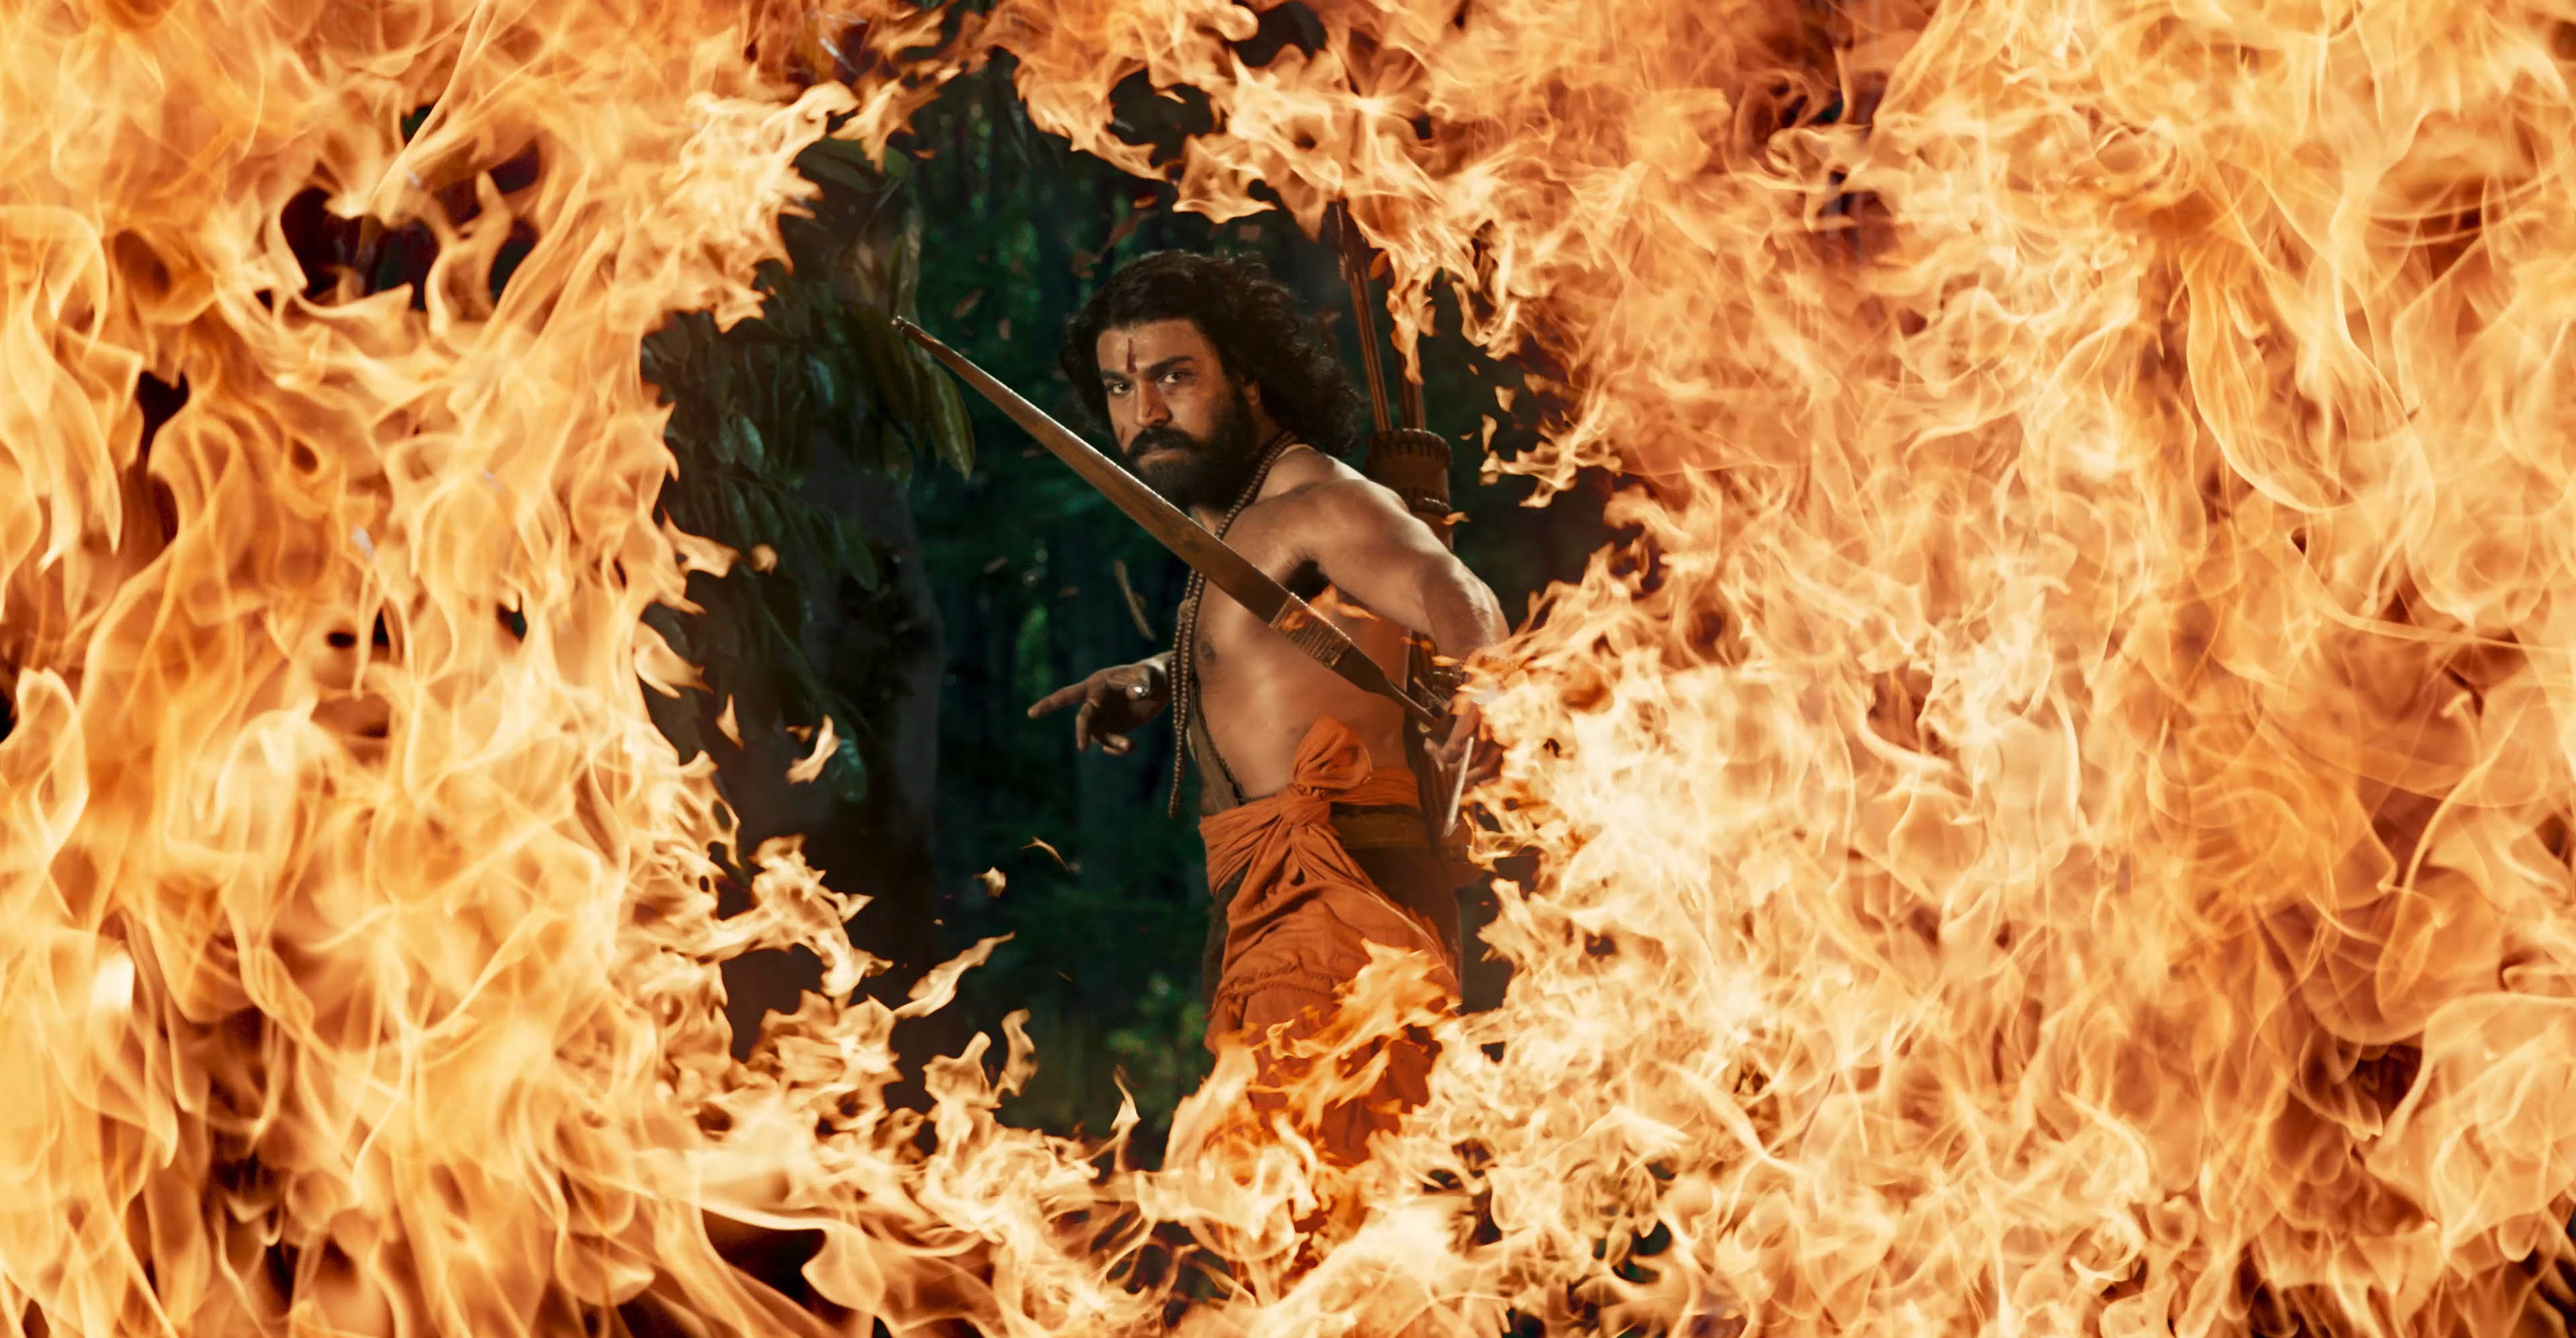 Ram shoots an arrow through a circle of flames